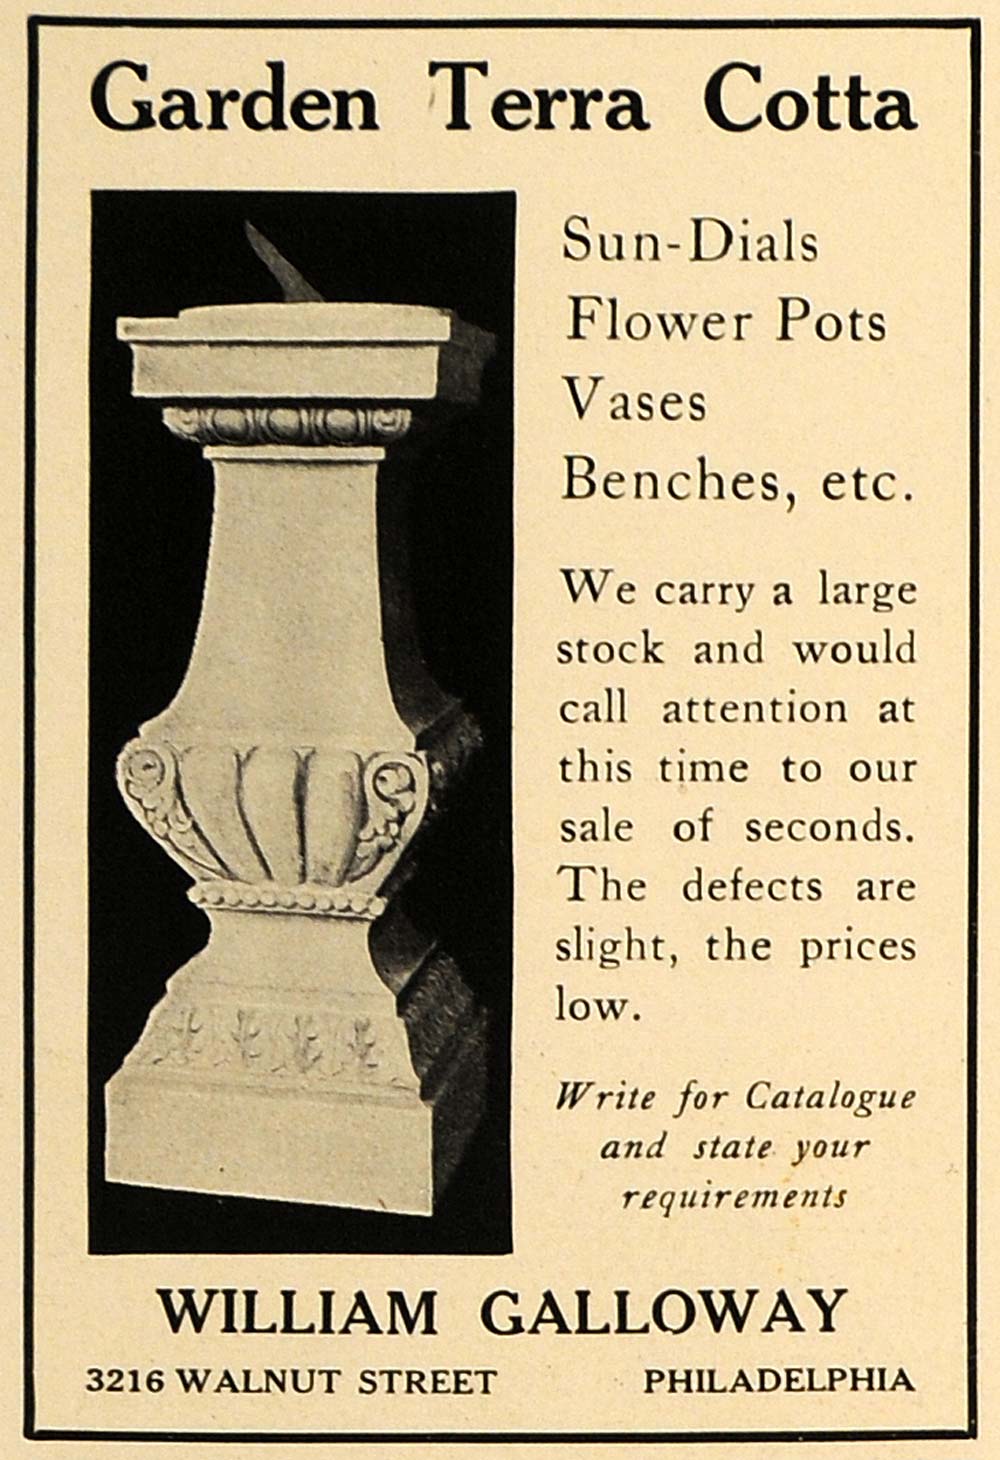 1909 Ad William Galloway Garden Terra Cotta Sundials - ORIGINAL ADVERTISING CL7